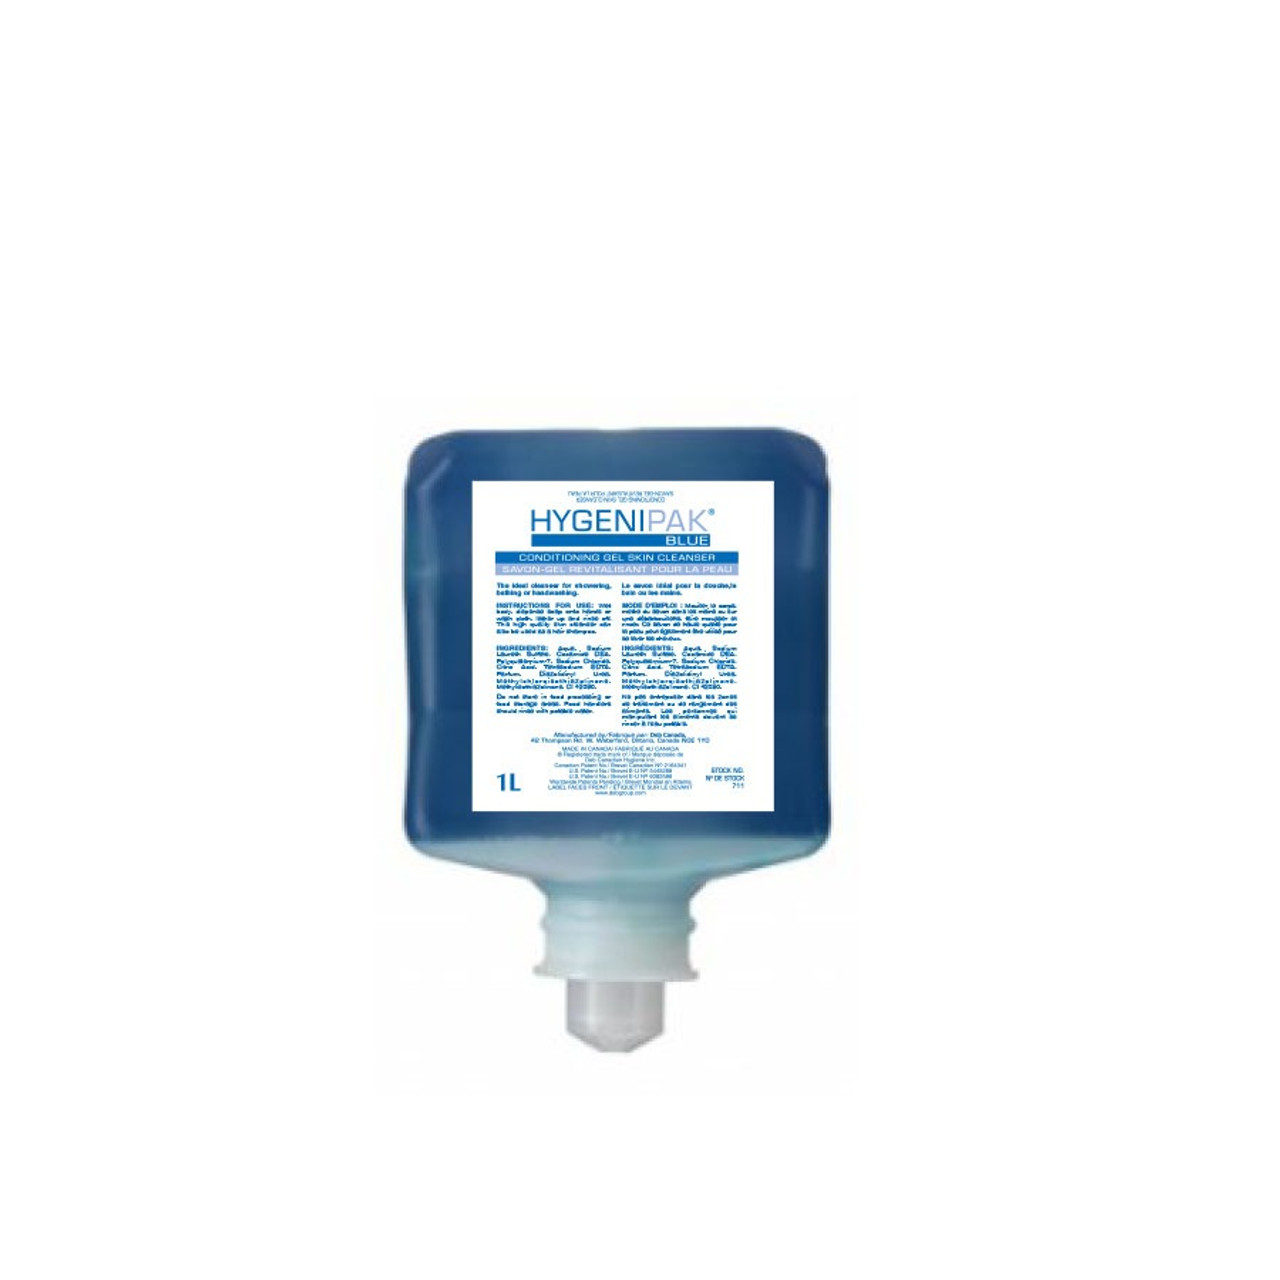 Hygenipak® Blue Healthcare Skin Conditioning Gel Cleanser 1L Refill Cartridge  711